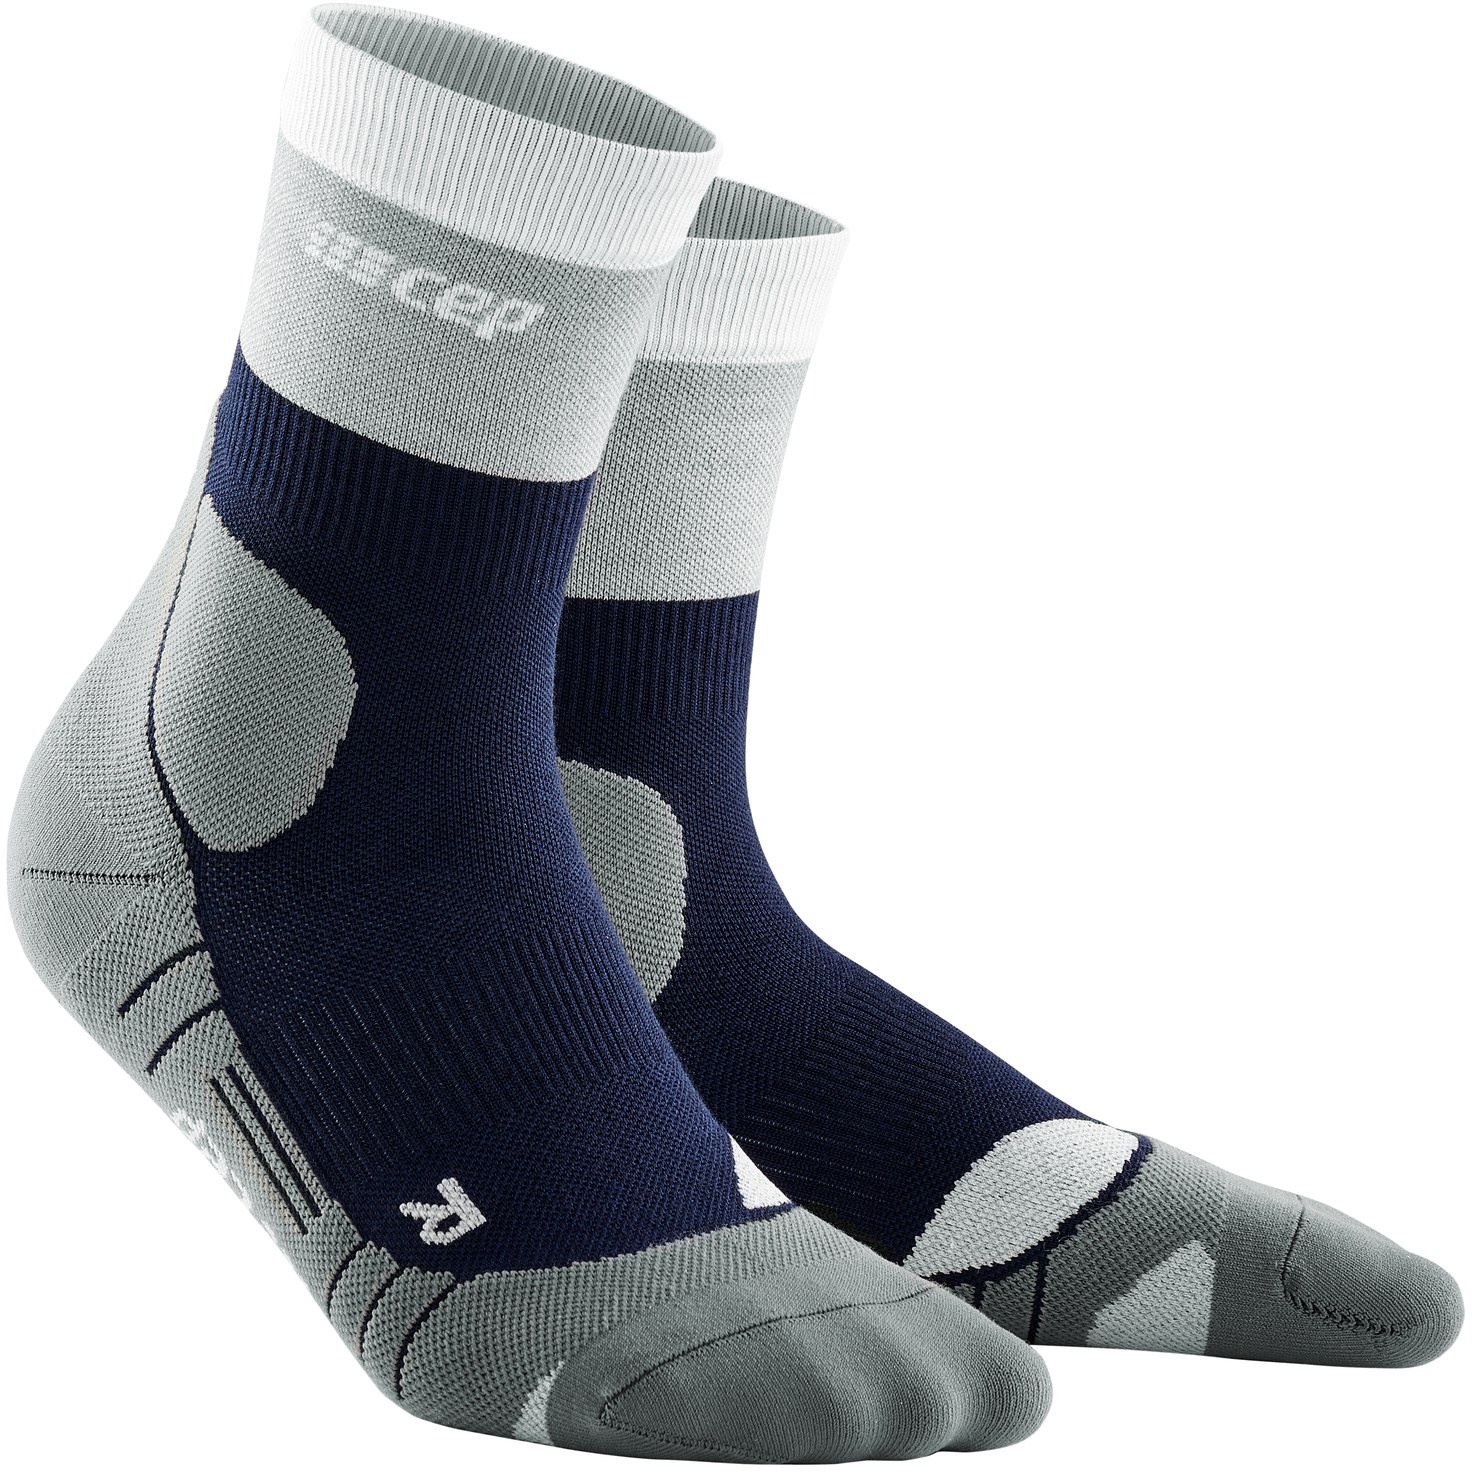 Picture of CEP Hiking Light Merino Mid Cut Compression Socks Women - marineblue/grey